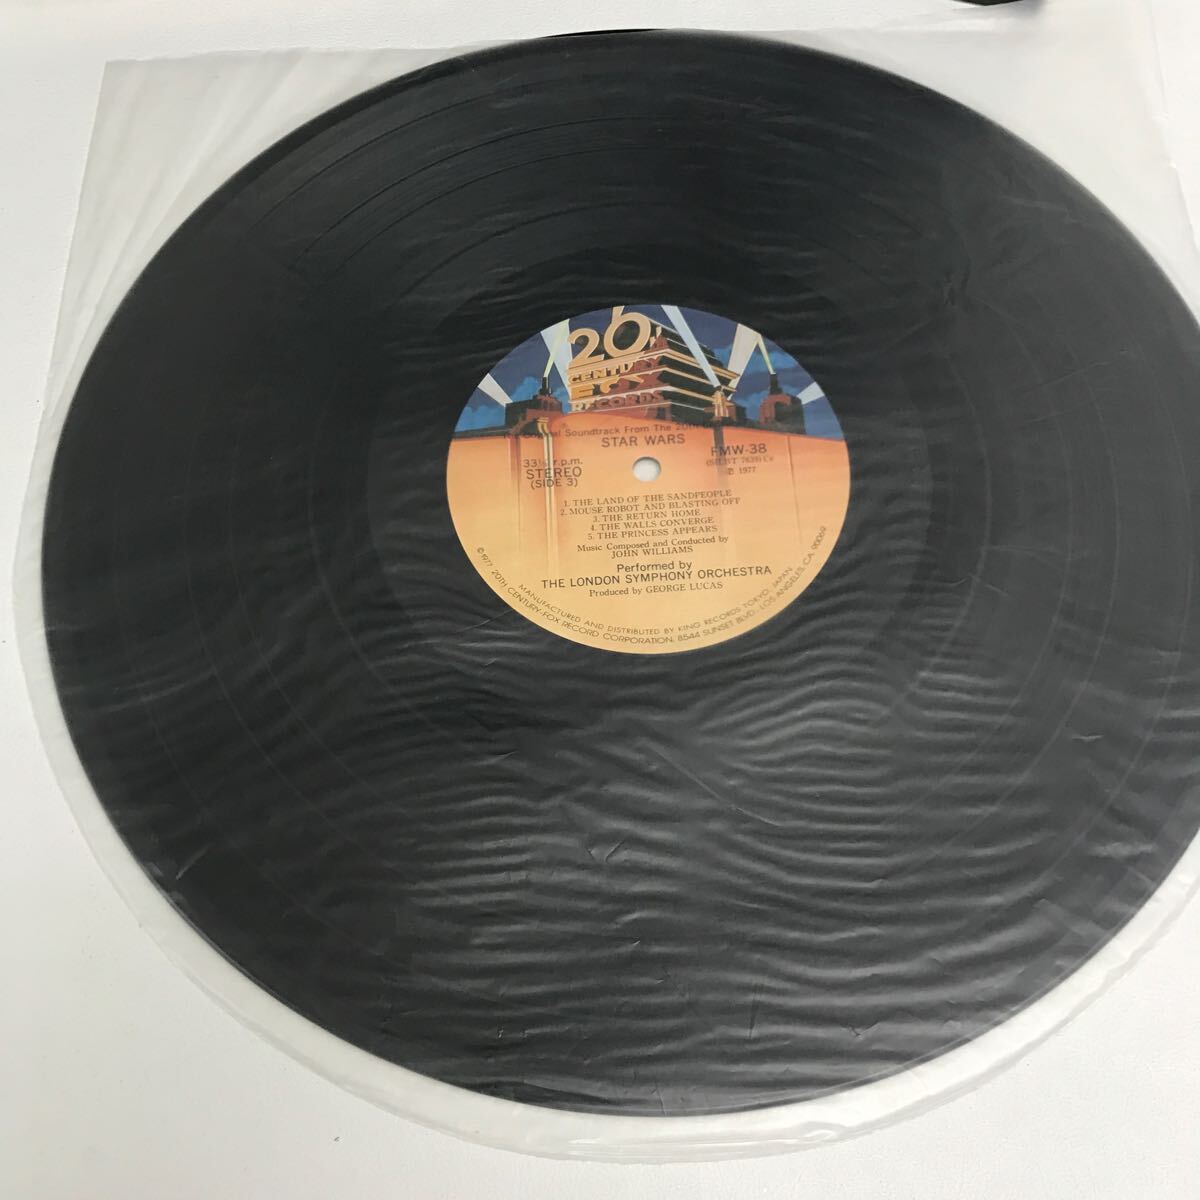 I0423A3 STAR WARS スター・ウォーズ オリジナル・サウンドトラック LP レコード 2枚組 帯付き 音楽 サントラ盤 FMW-37/8 キングレコード_画像7